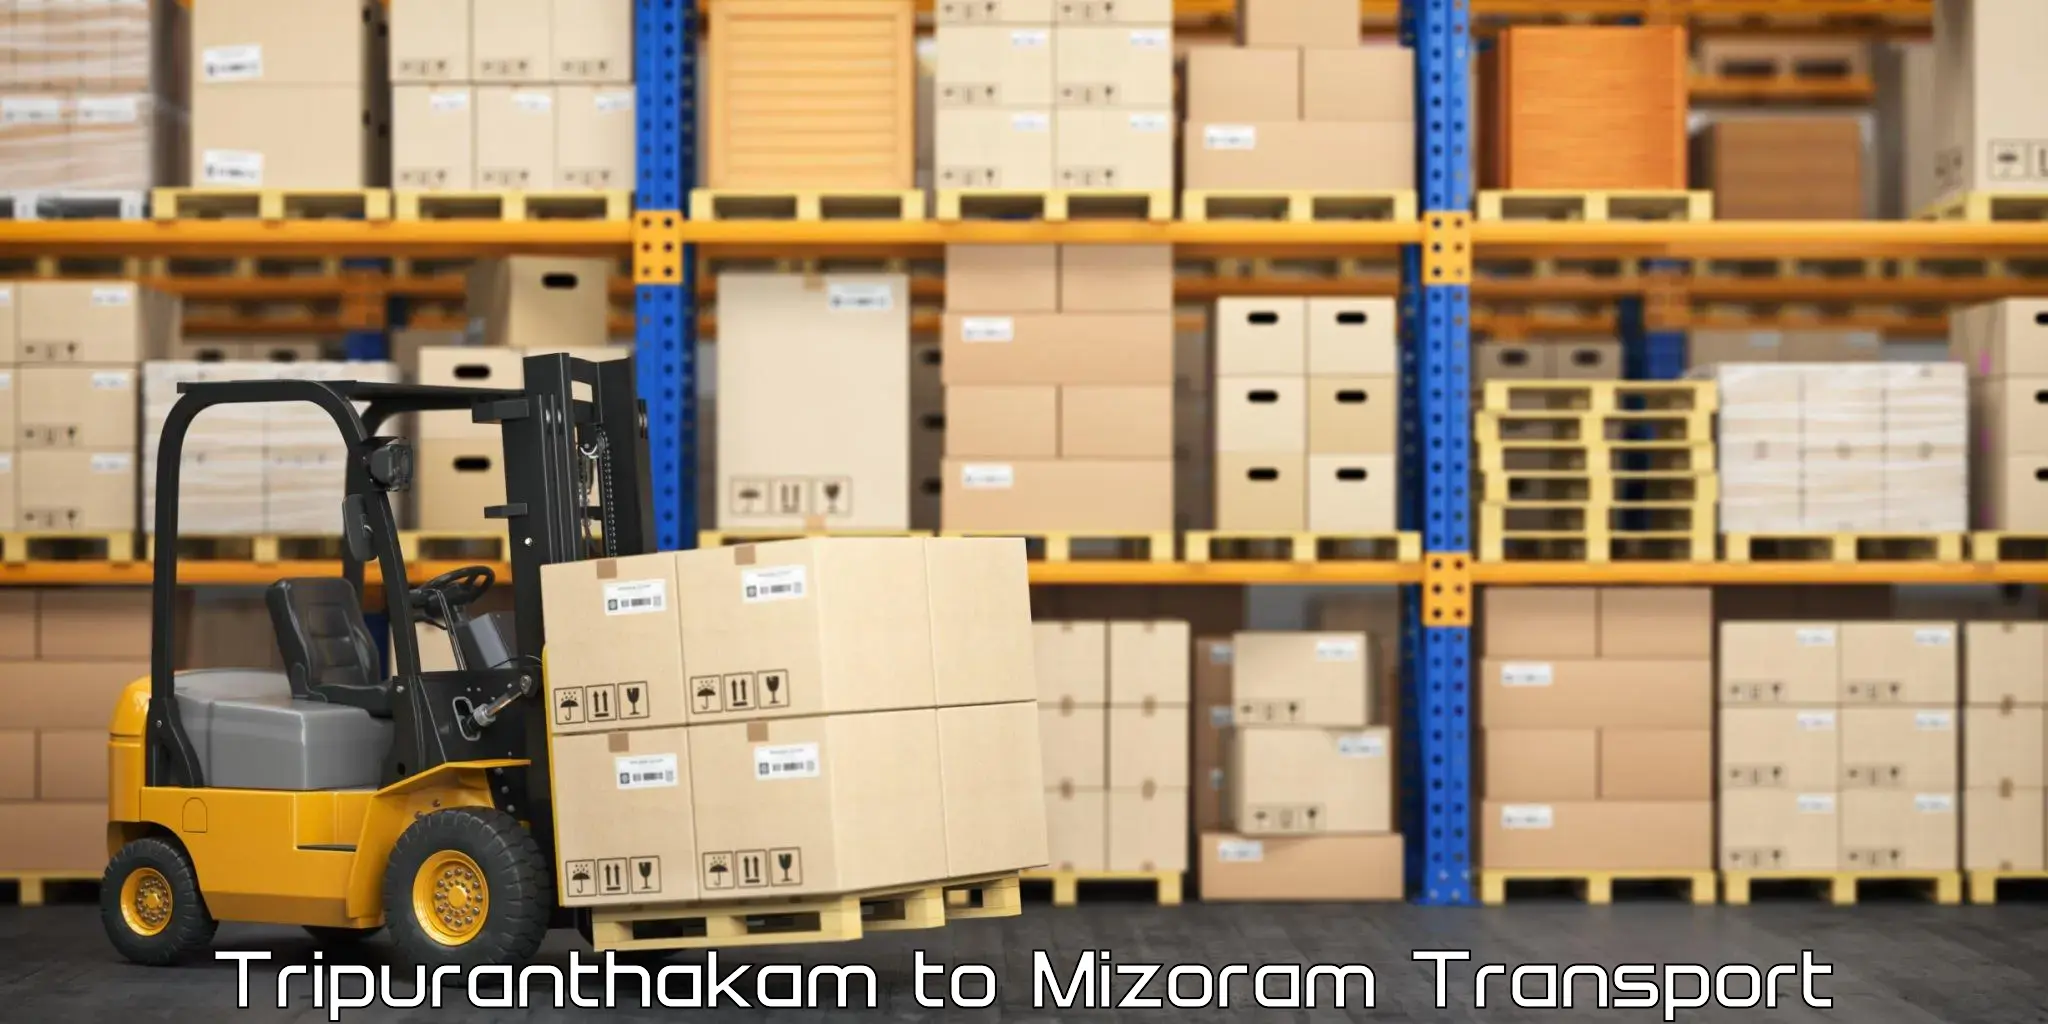 Goods delivery service Tripuranthakam to Mizoram